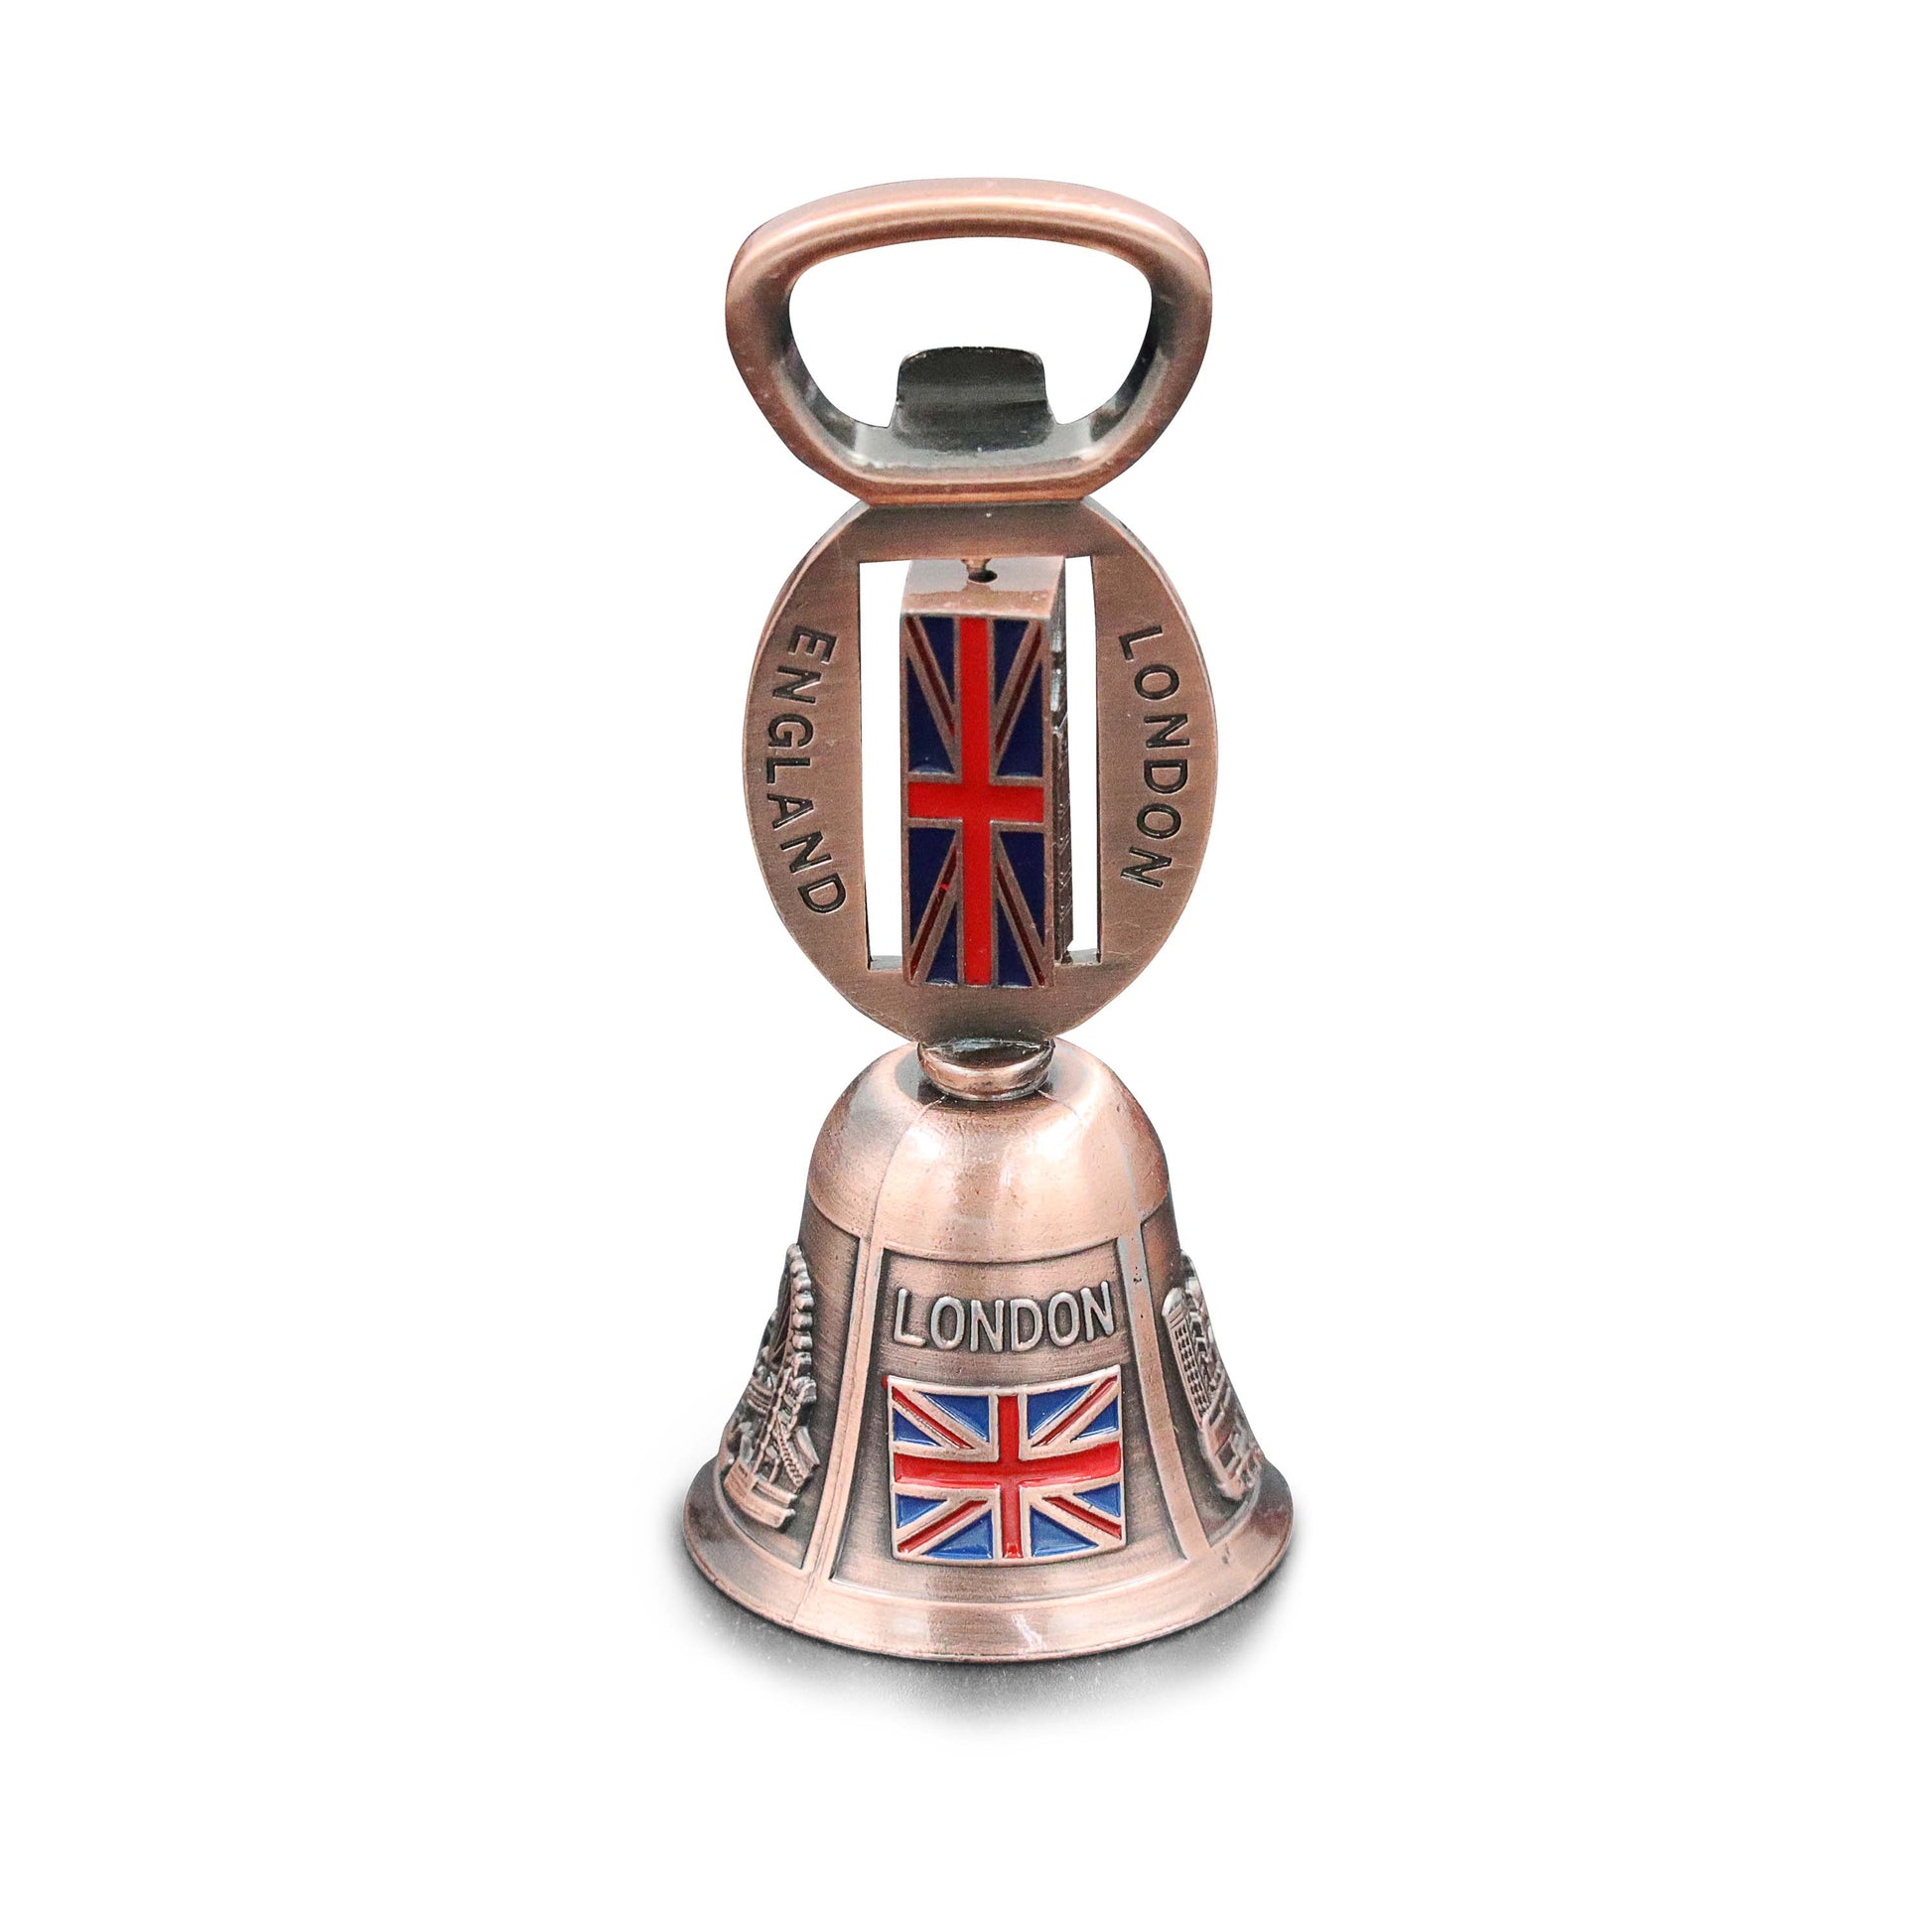 London souvenir dinner bells & bottle openers